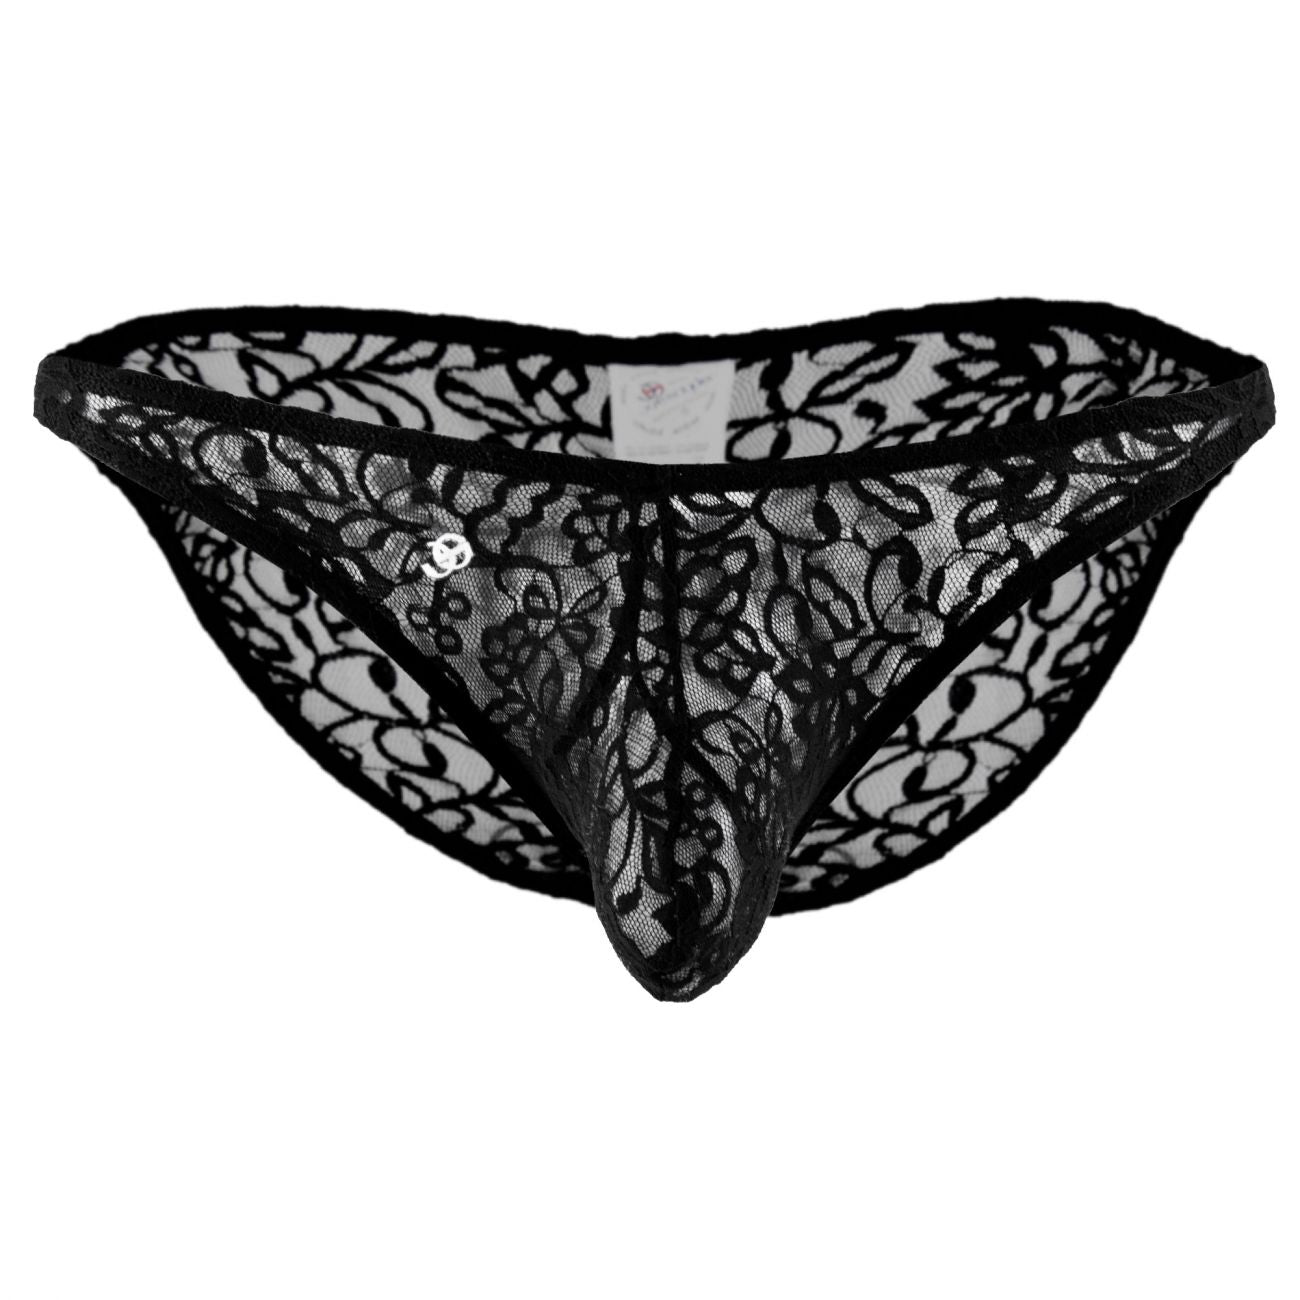 Joe Snyder JSMBUL01 Maxibulge Bikini Black Lace